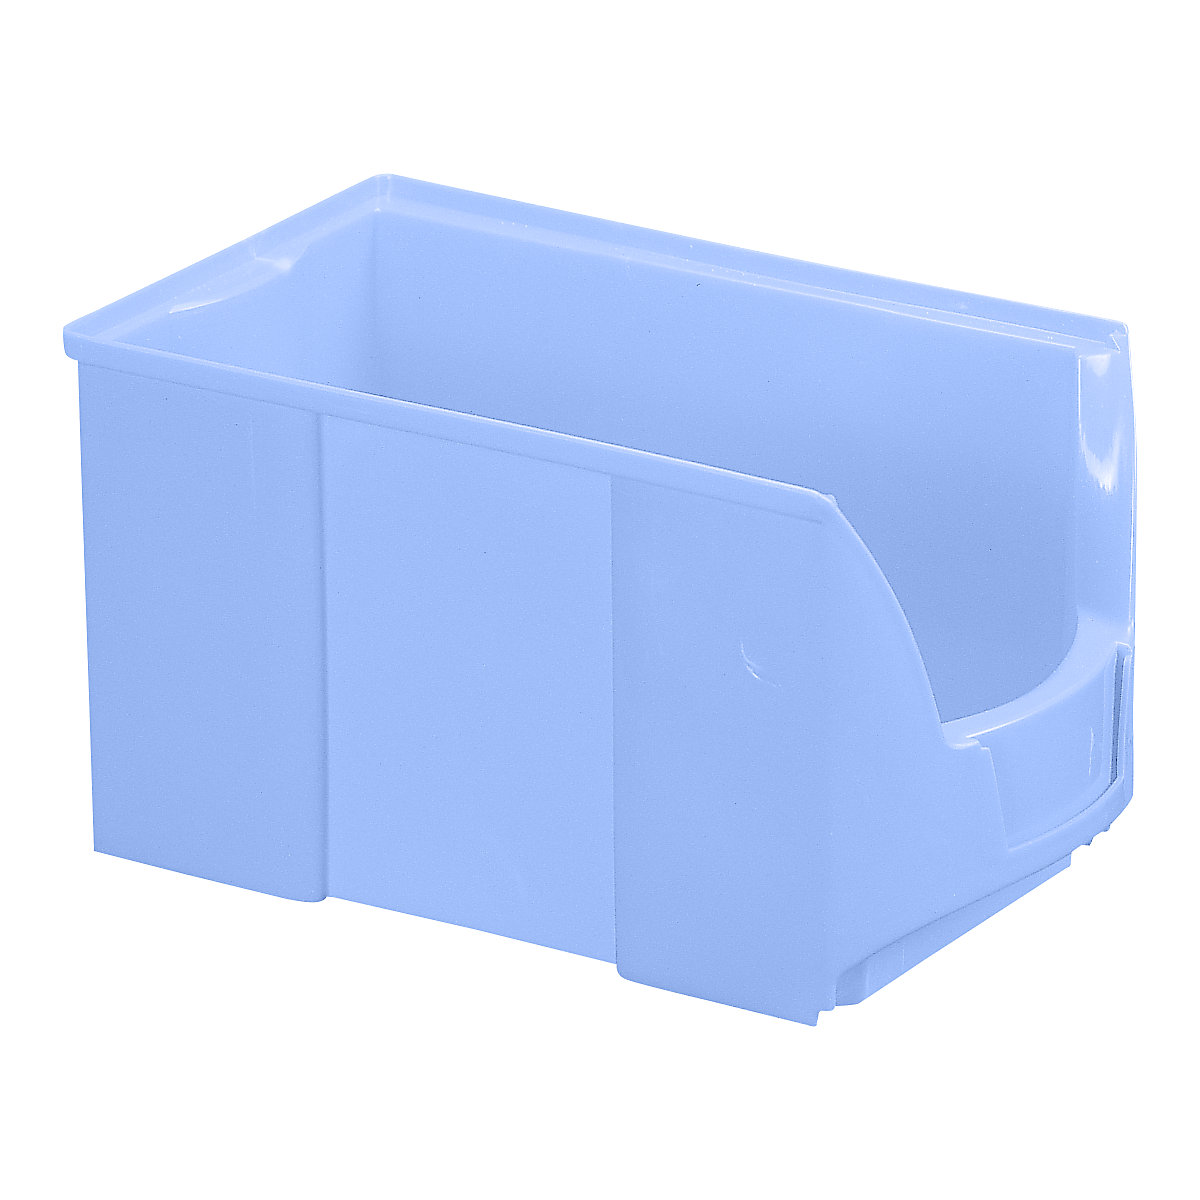 FUTURA open fronted storage bin made of polyethylene